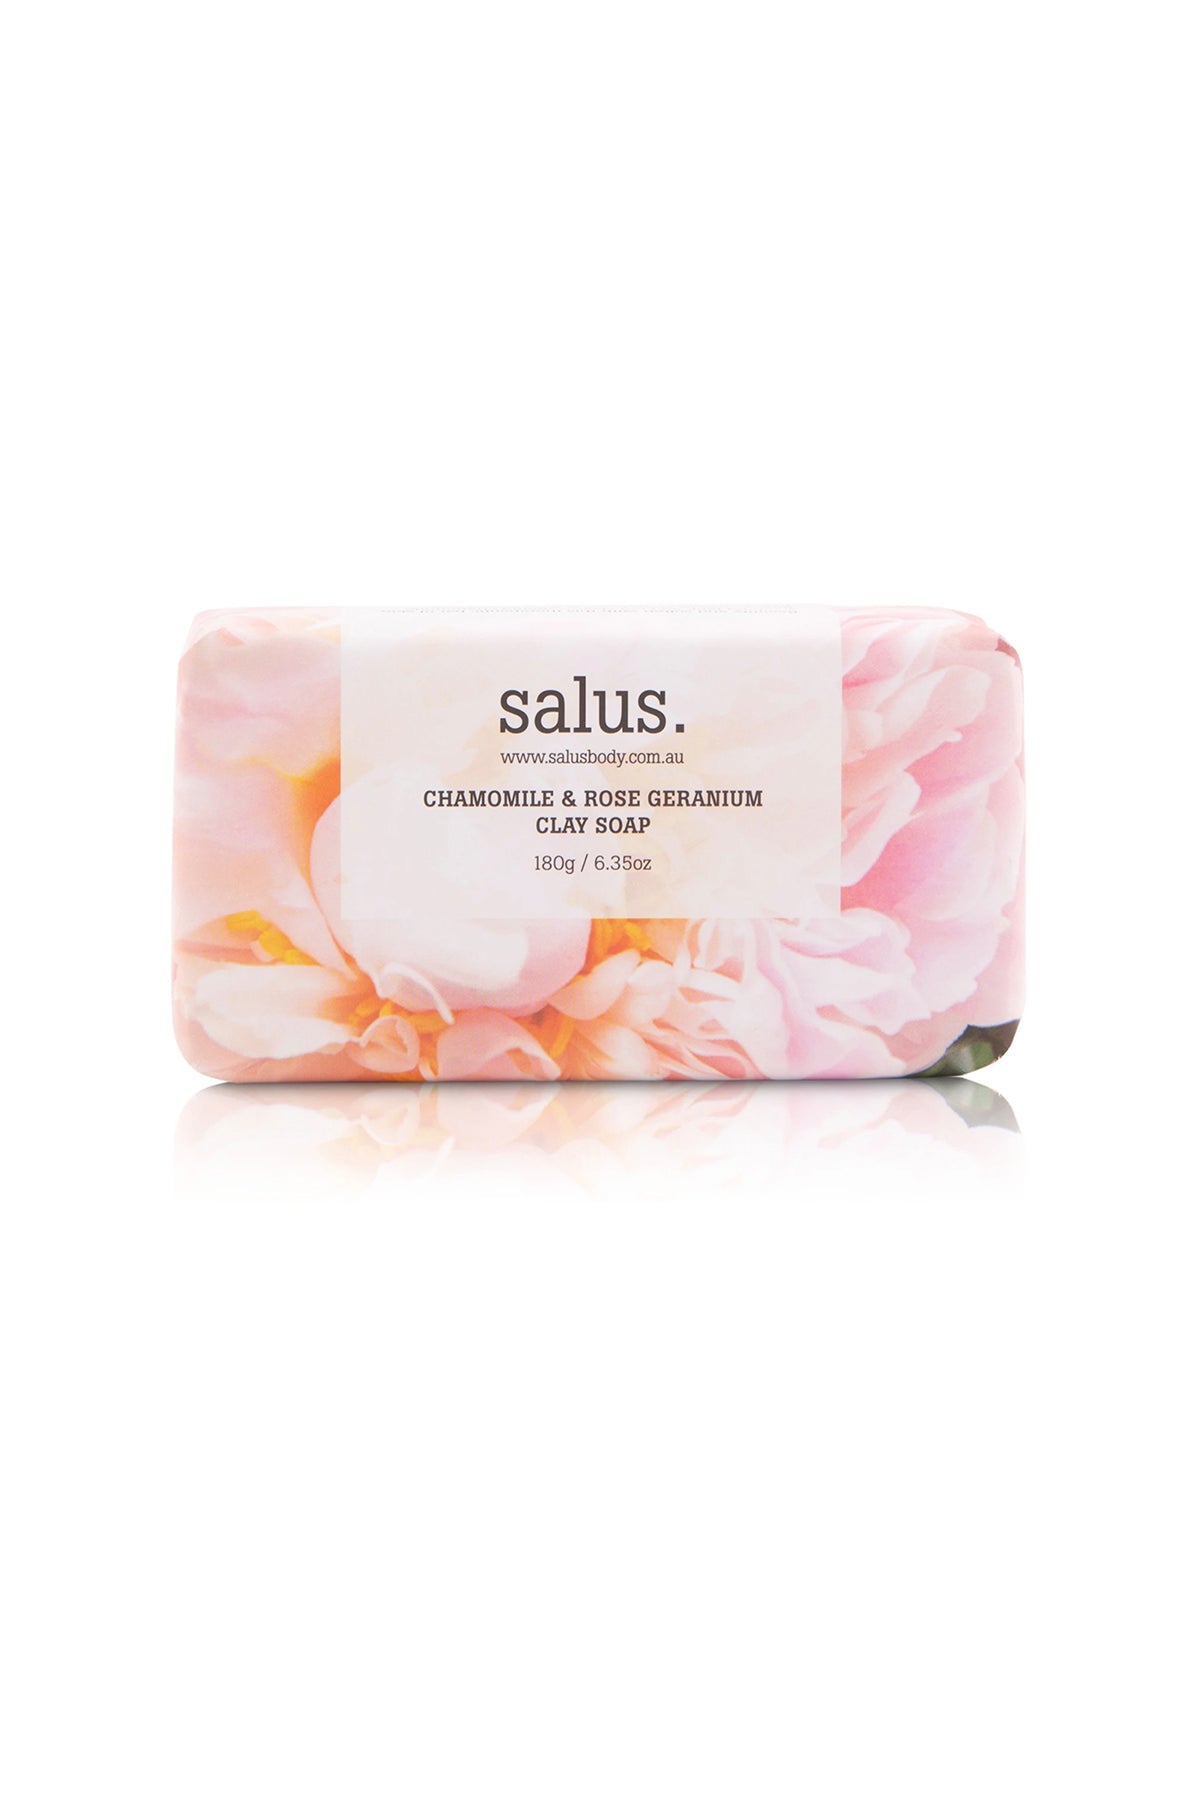 Chamomile and Rose Geranium Clay Soap